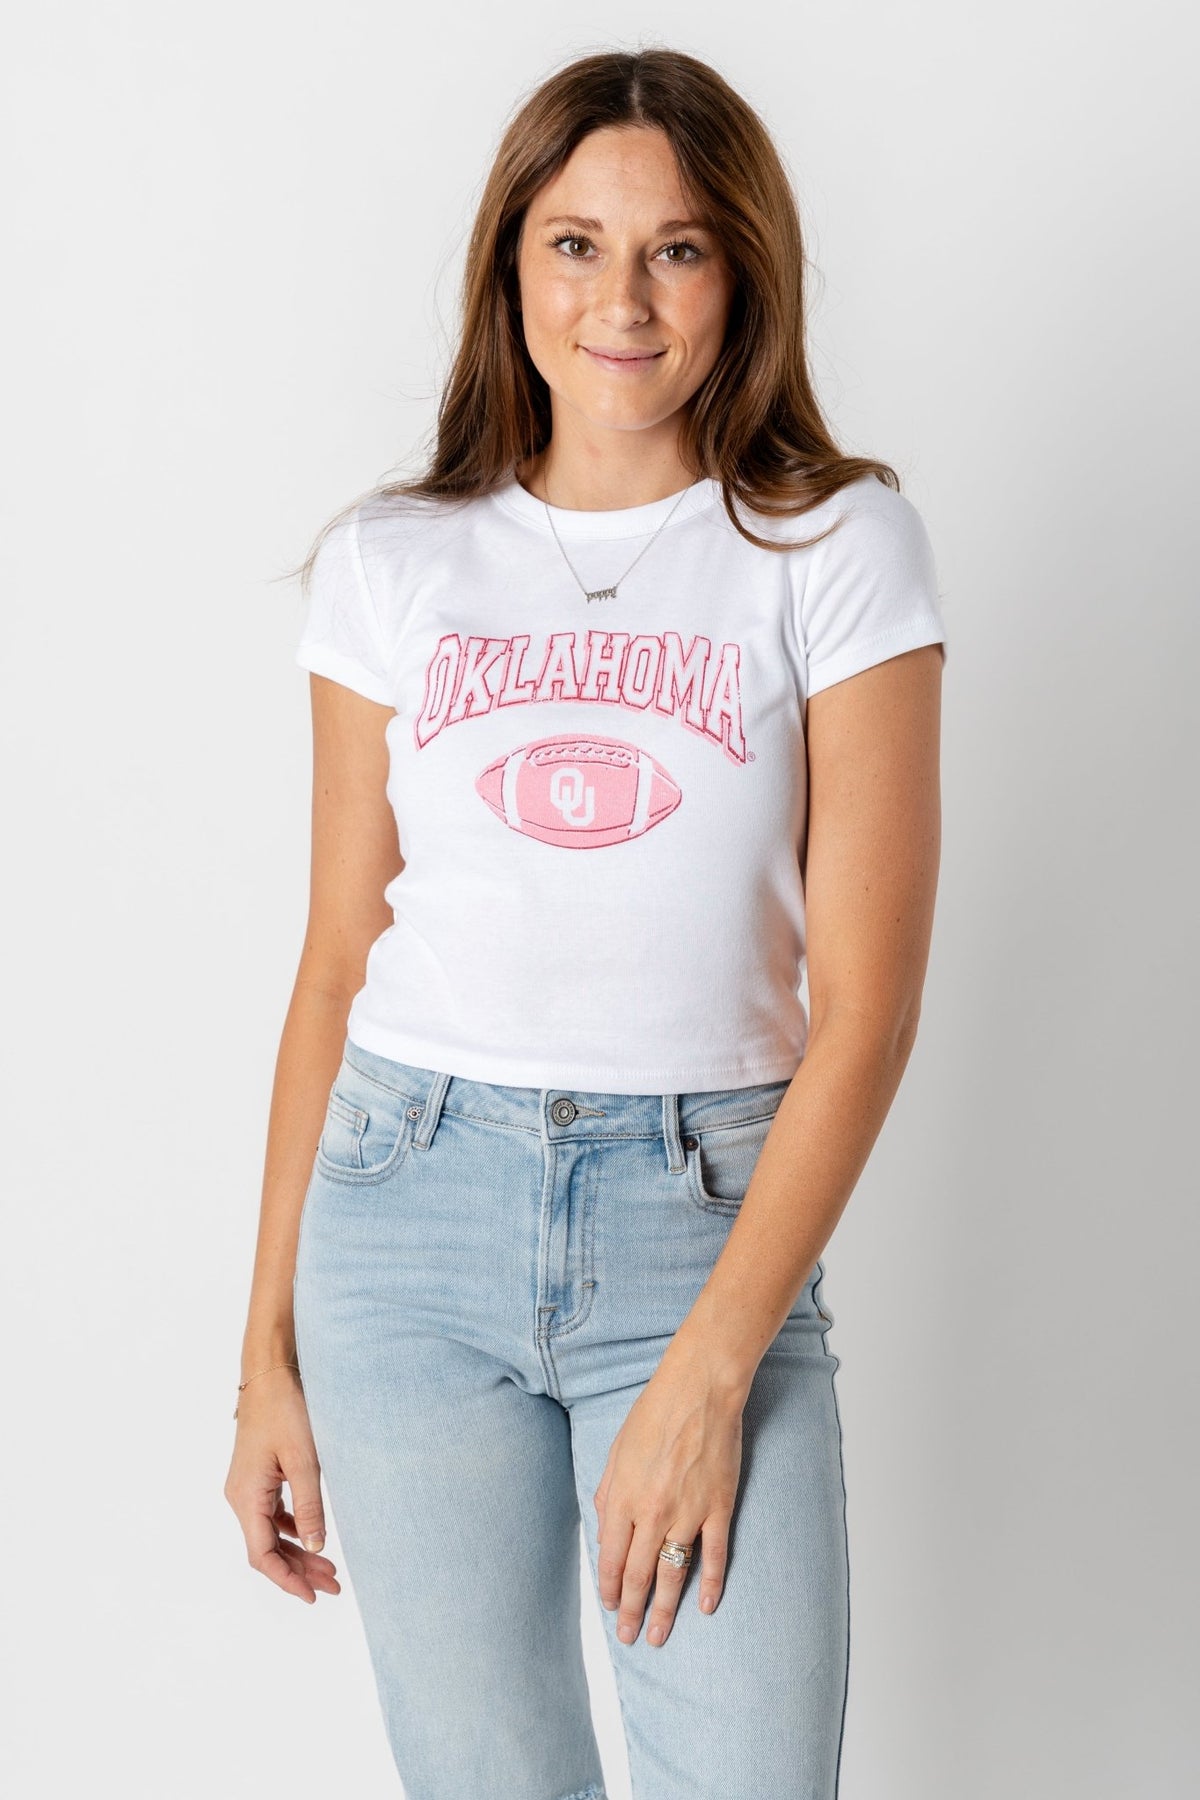 OU OU Wonka football micro cropped t-shirt white T-shirts | Lush Fashion Lounge Trendy Oklahoma University Sooners Apparel & Cute Gameday T-Shirts